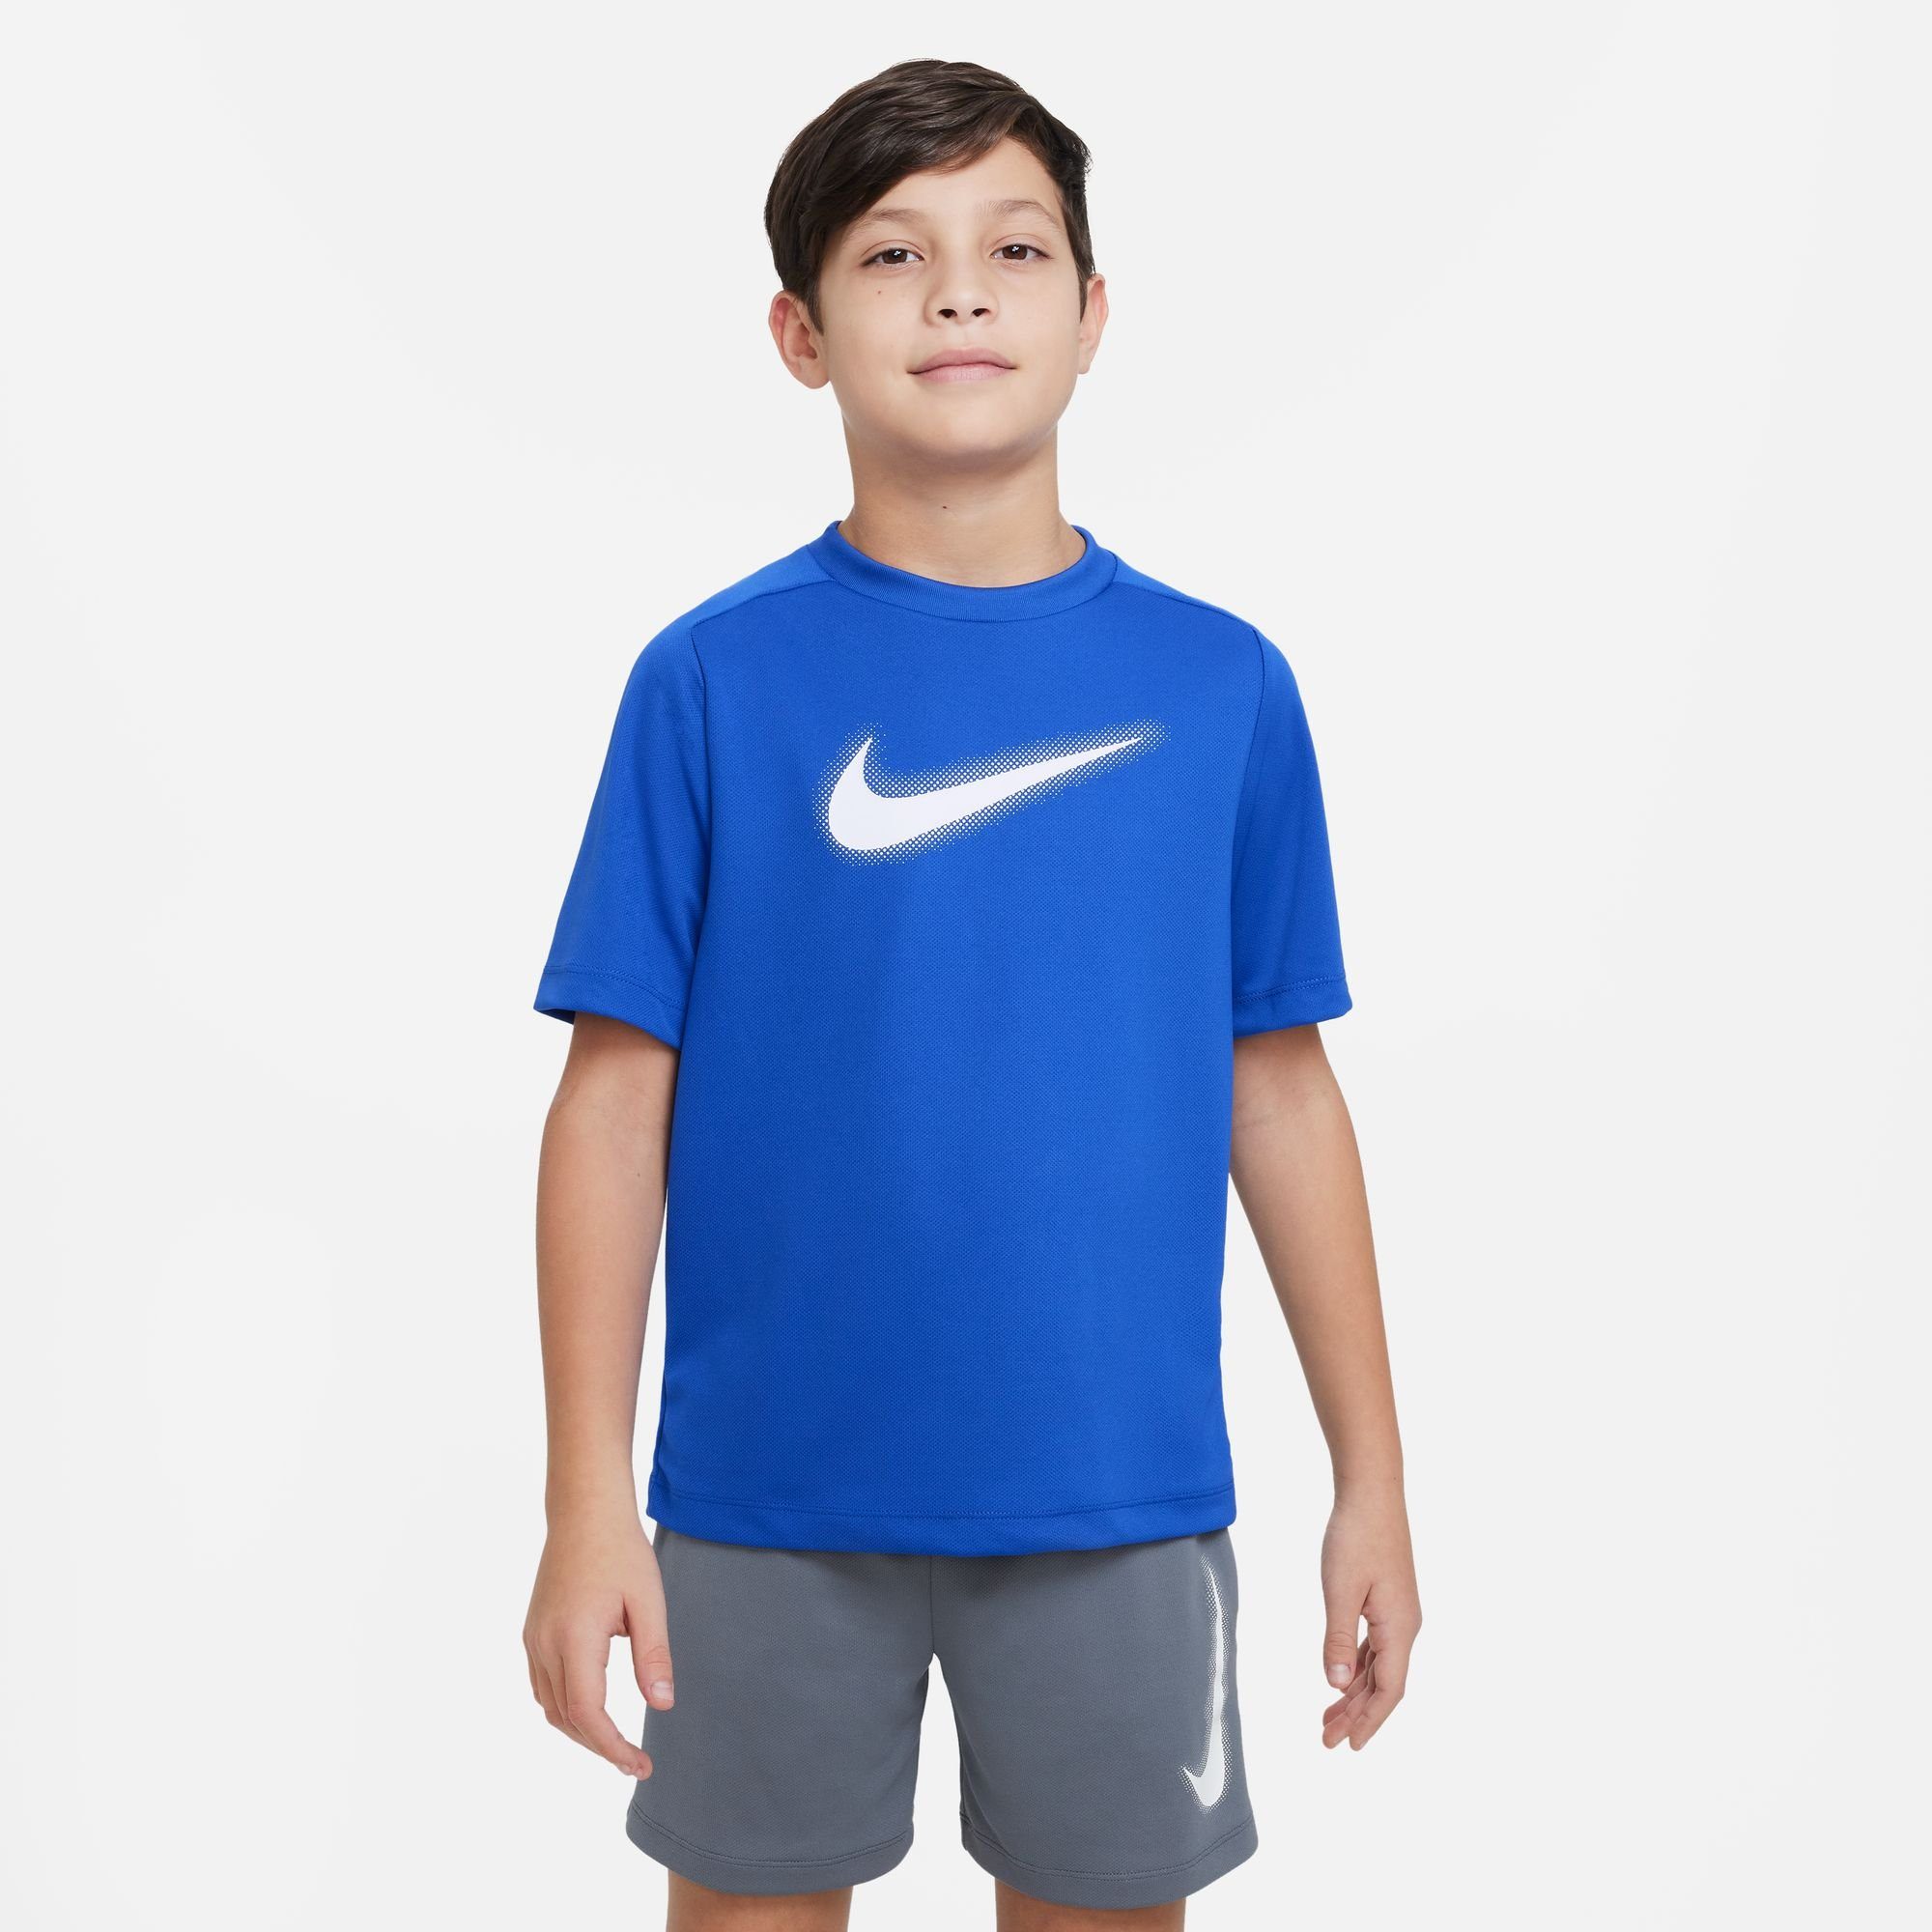 ROYAL/WHITE BIG Nike TOP Trainingsshirt DRI-FIT MULTI+ GRAPHIC GAME (BOYS) TRAINING KIDS'